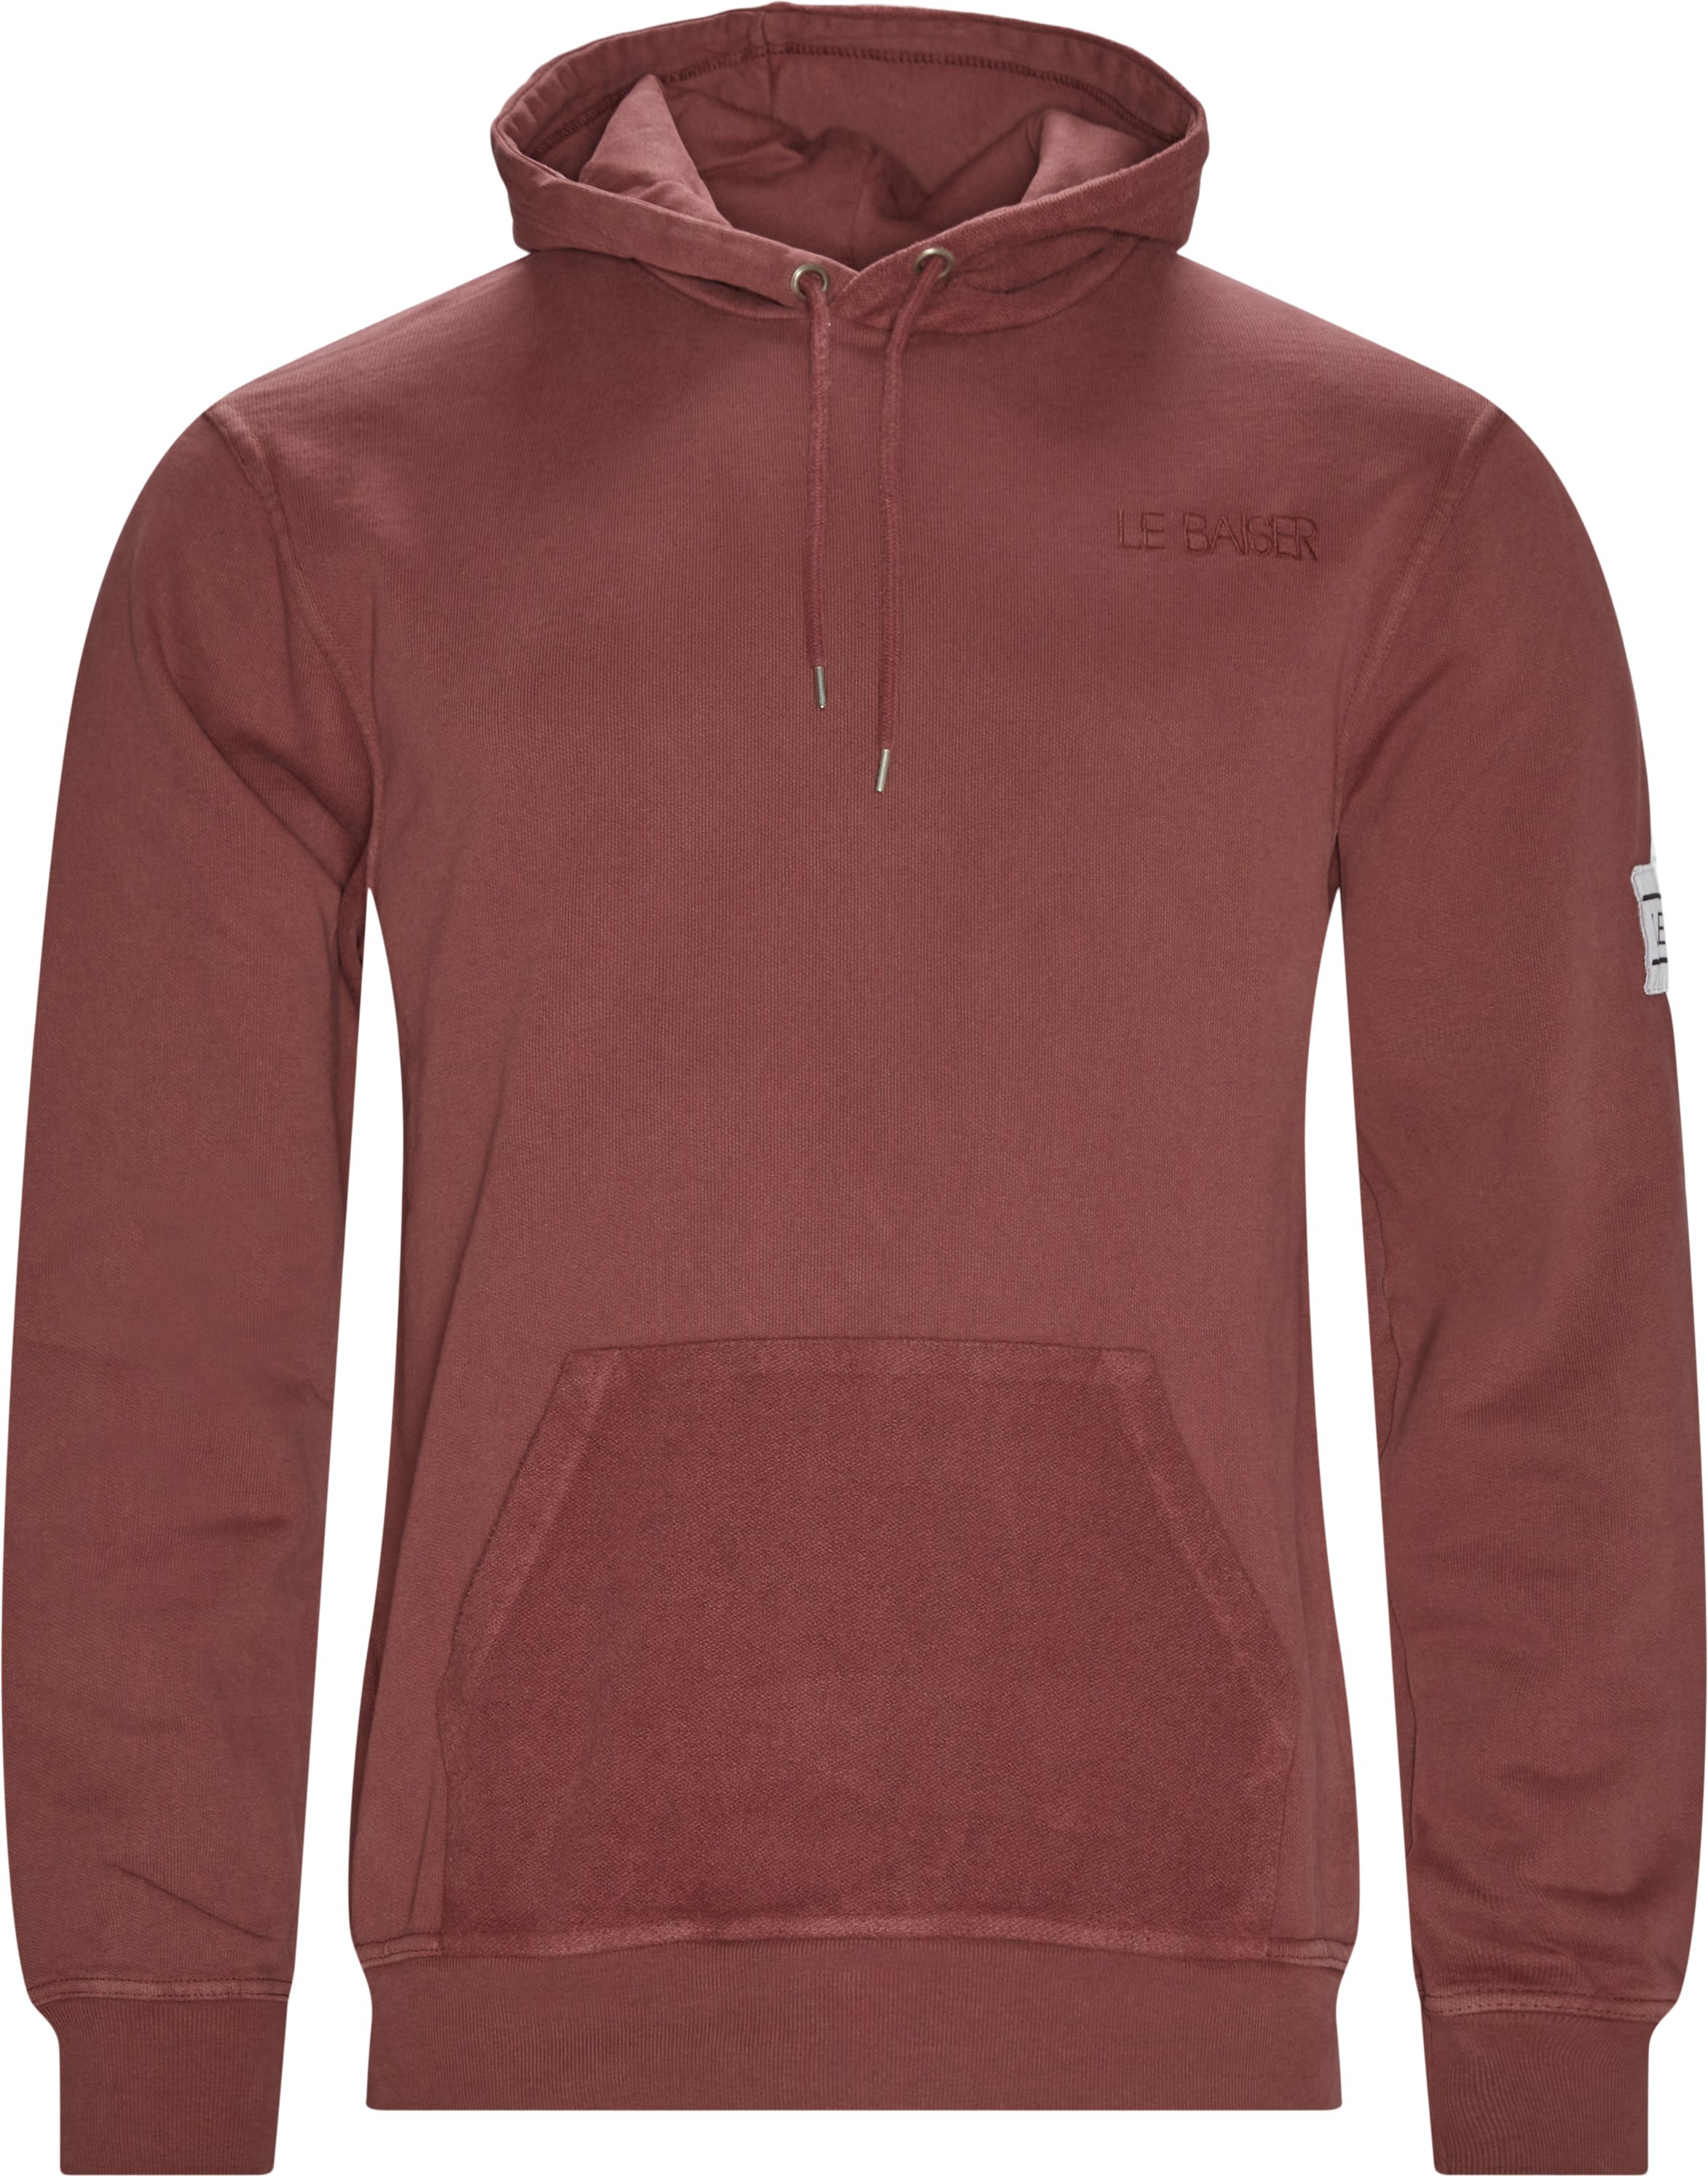 Borgo hoodie - Sweatshirts - Bordeaux